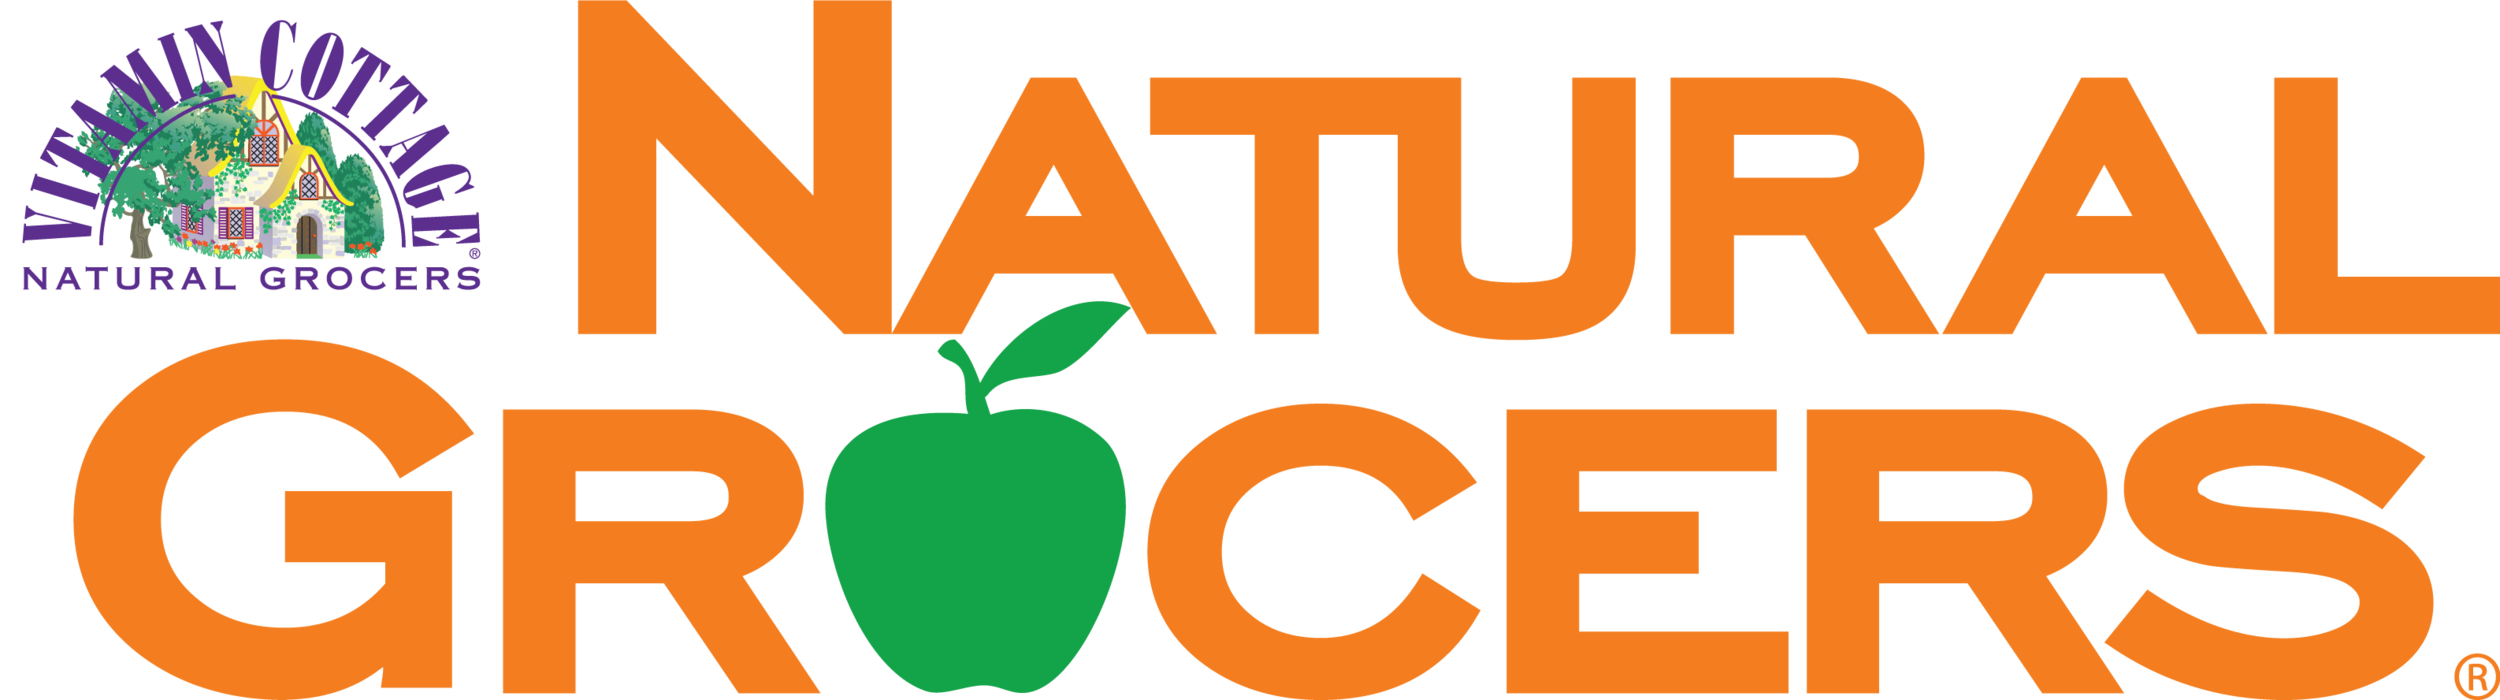 Natural-Grocers-logo.png